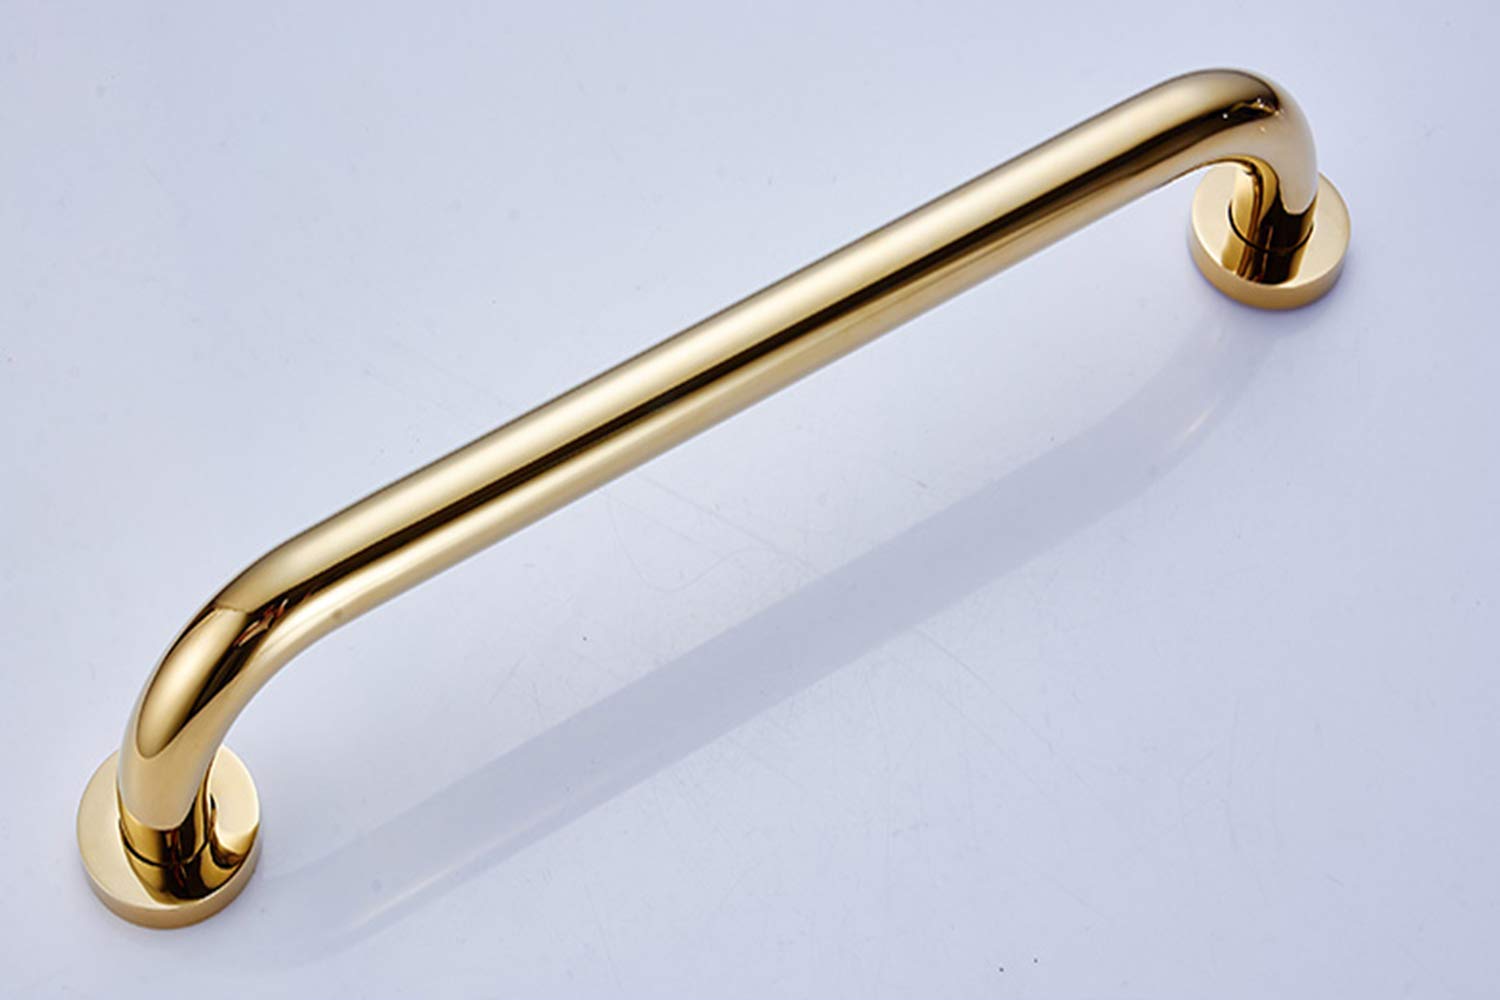 ELLO&ALLO Bathroom Shower Grab Bar with Concealed Screws, Home Care Bath Hardware, Gold Finish (12 Inch)